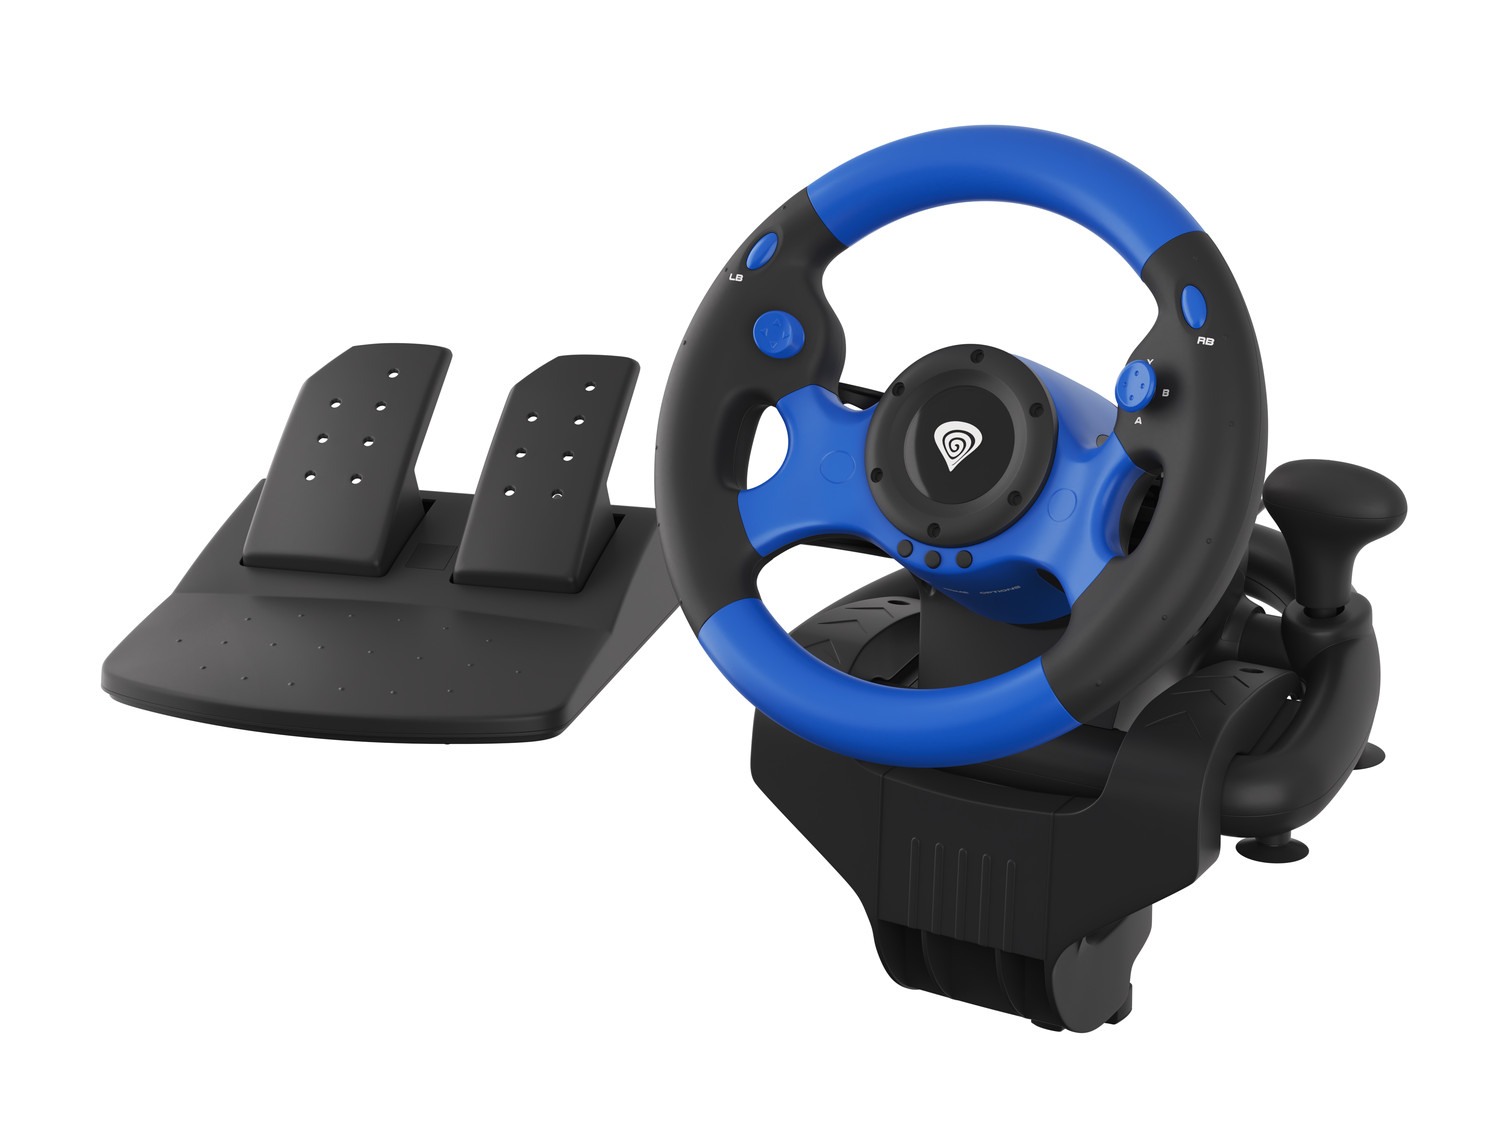 Herní volant Genesis Seaborg 350, multiplatformní pro PC, PS4, PS3,  Xbox One, Xbox 360, Nintendo Switch